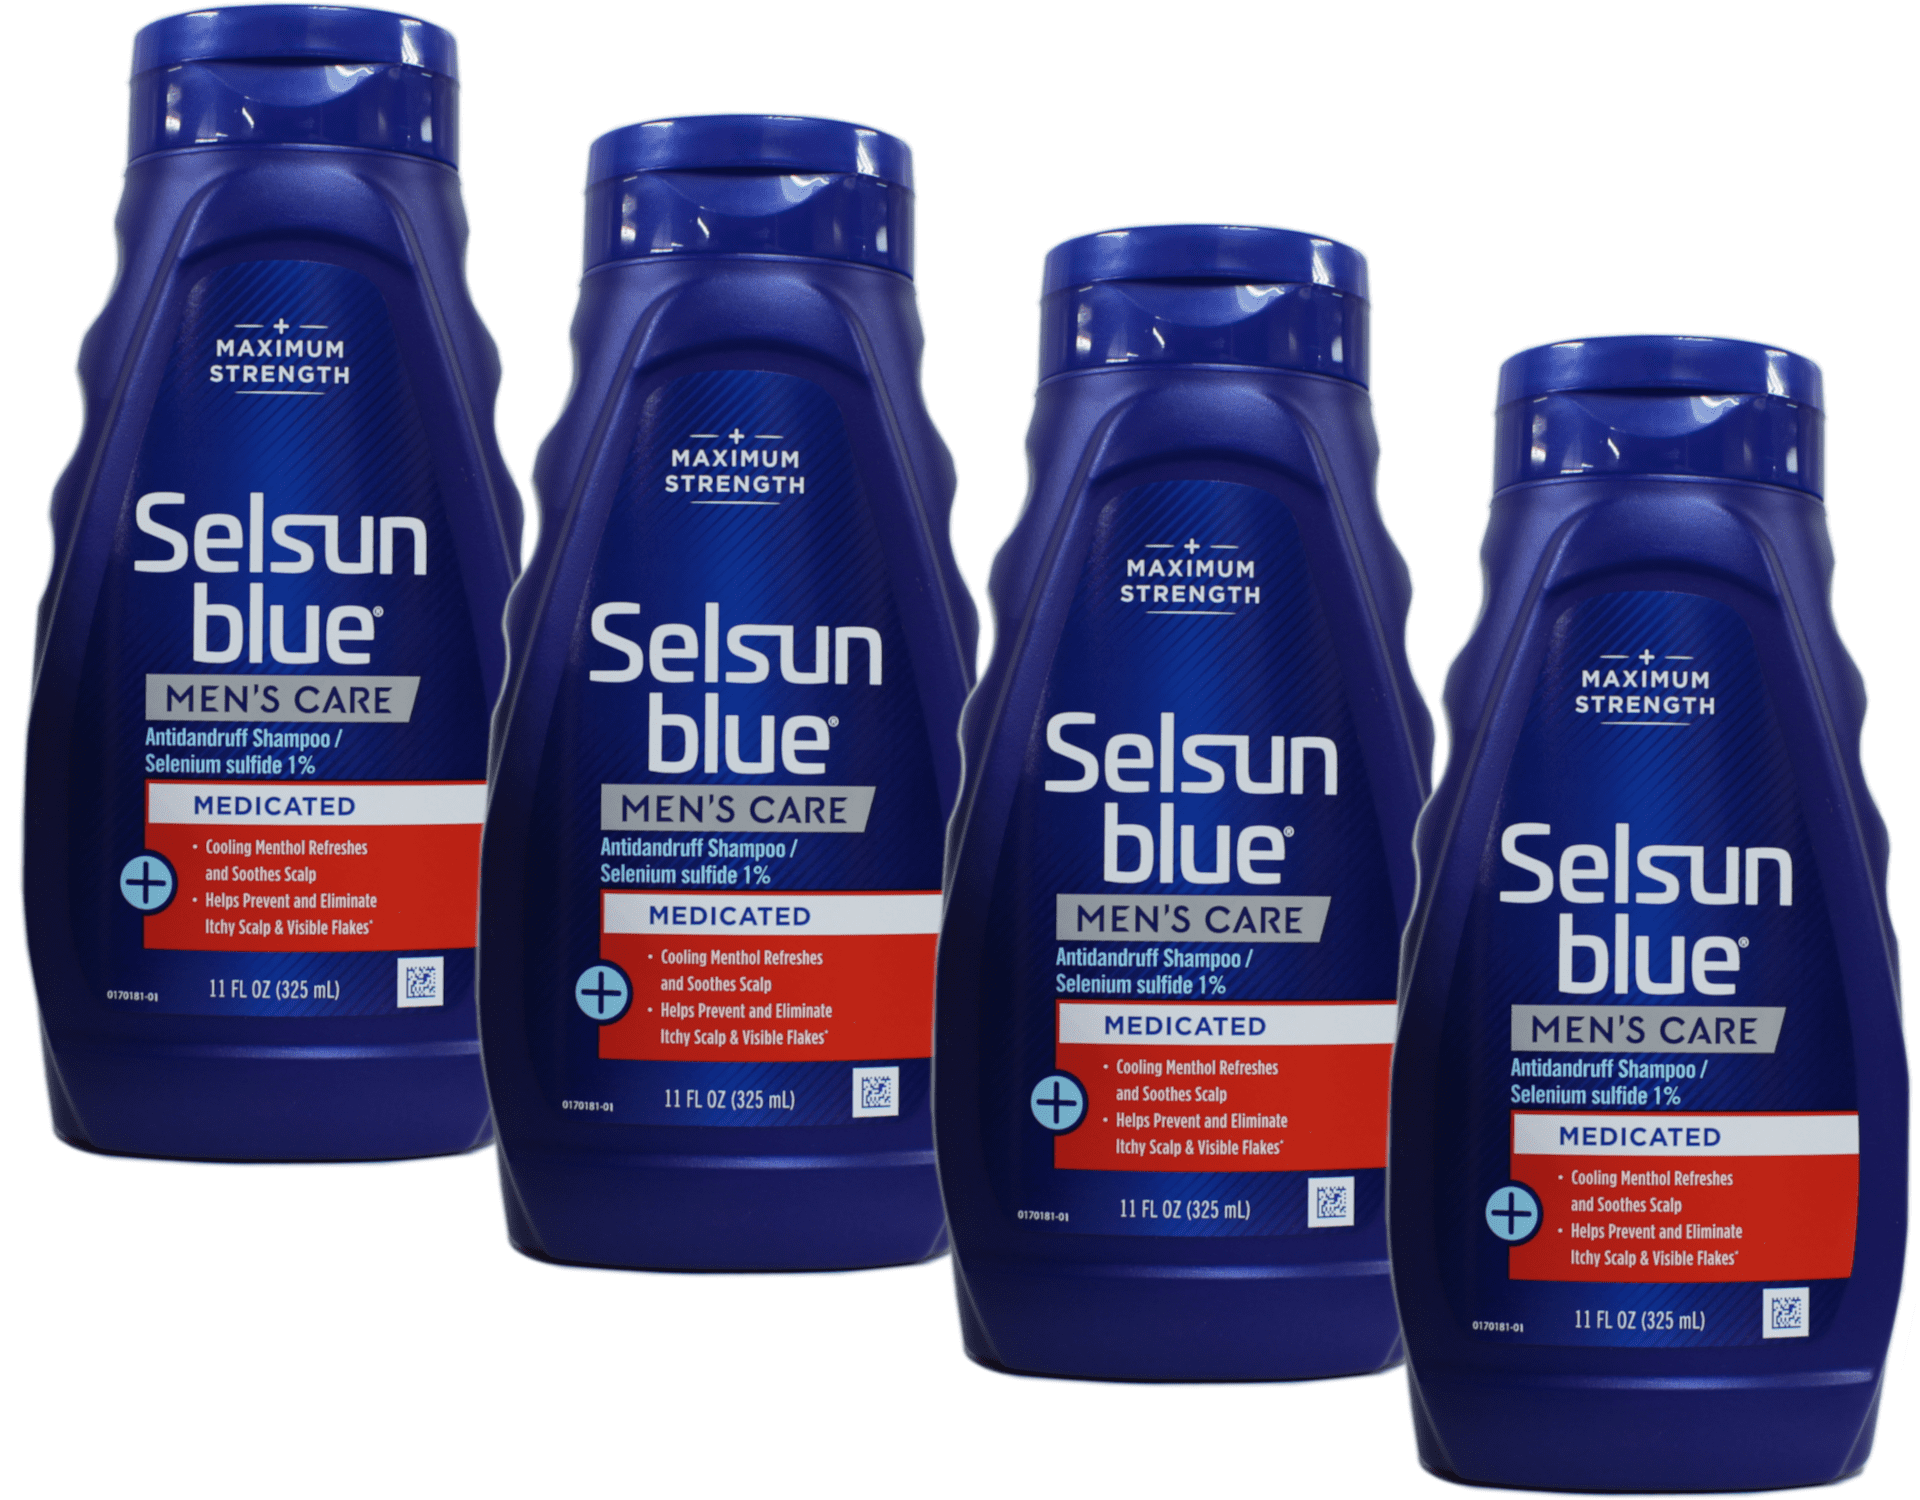 Can Selsun Blue Shampoo Cause Hair Loss? - wide 7